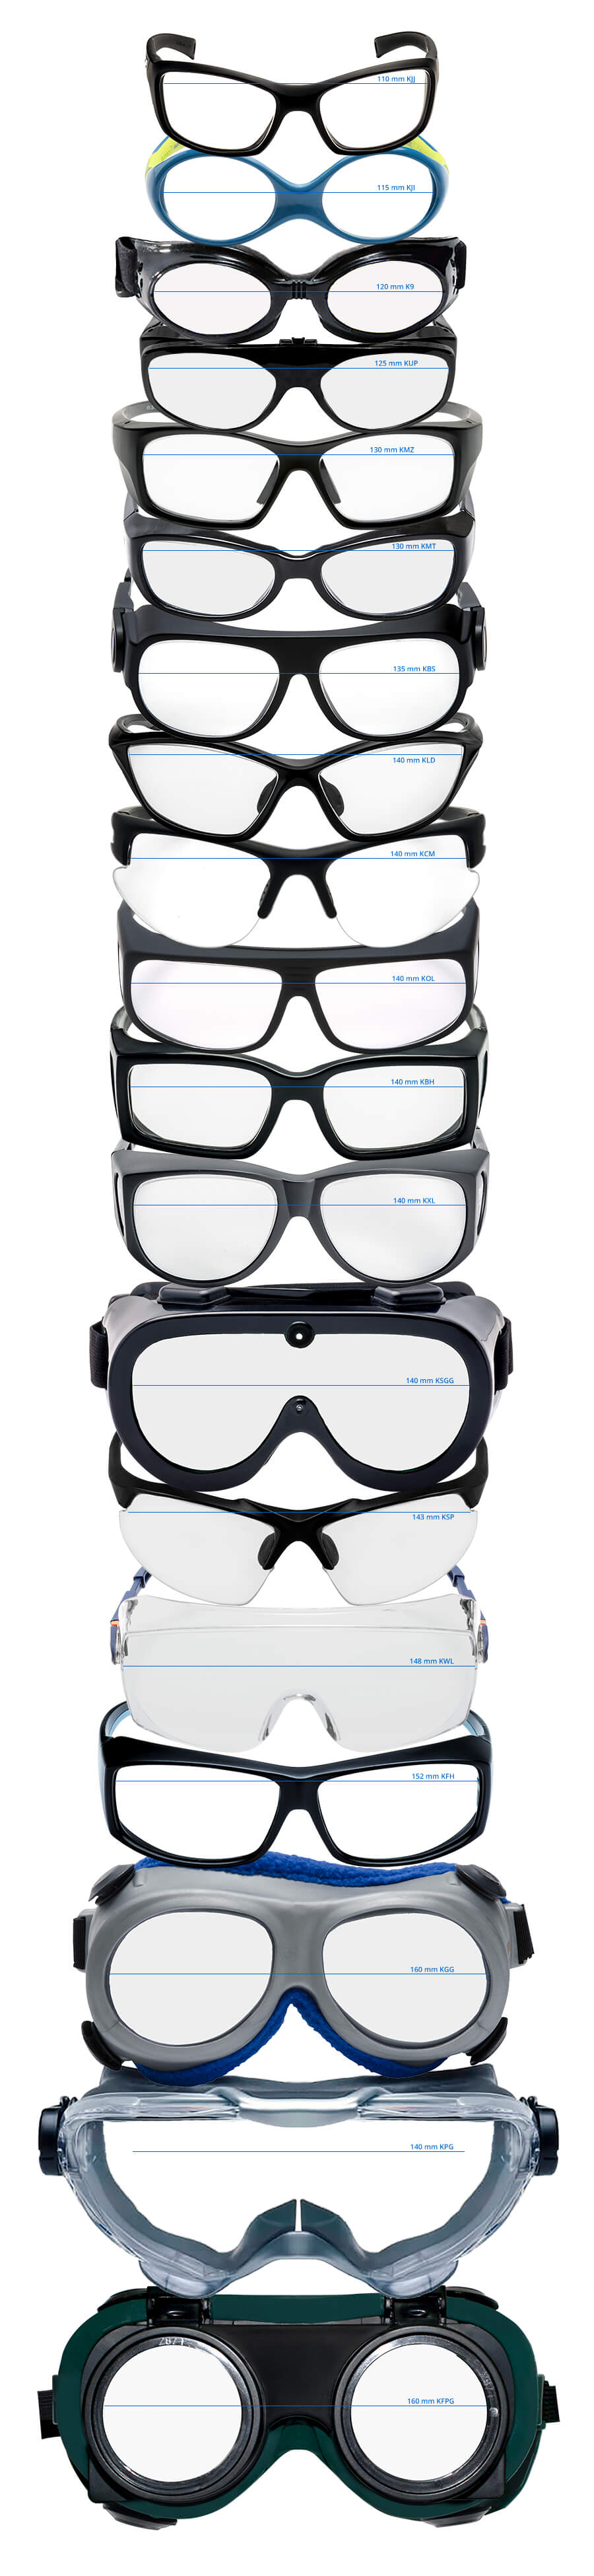 Kentek's Eyewear - Compare Frames